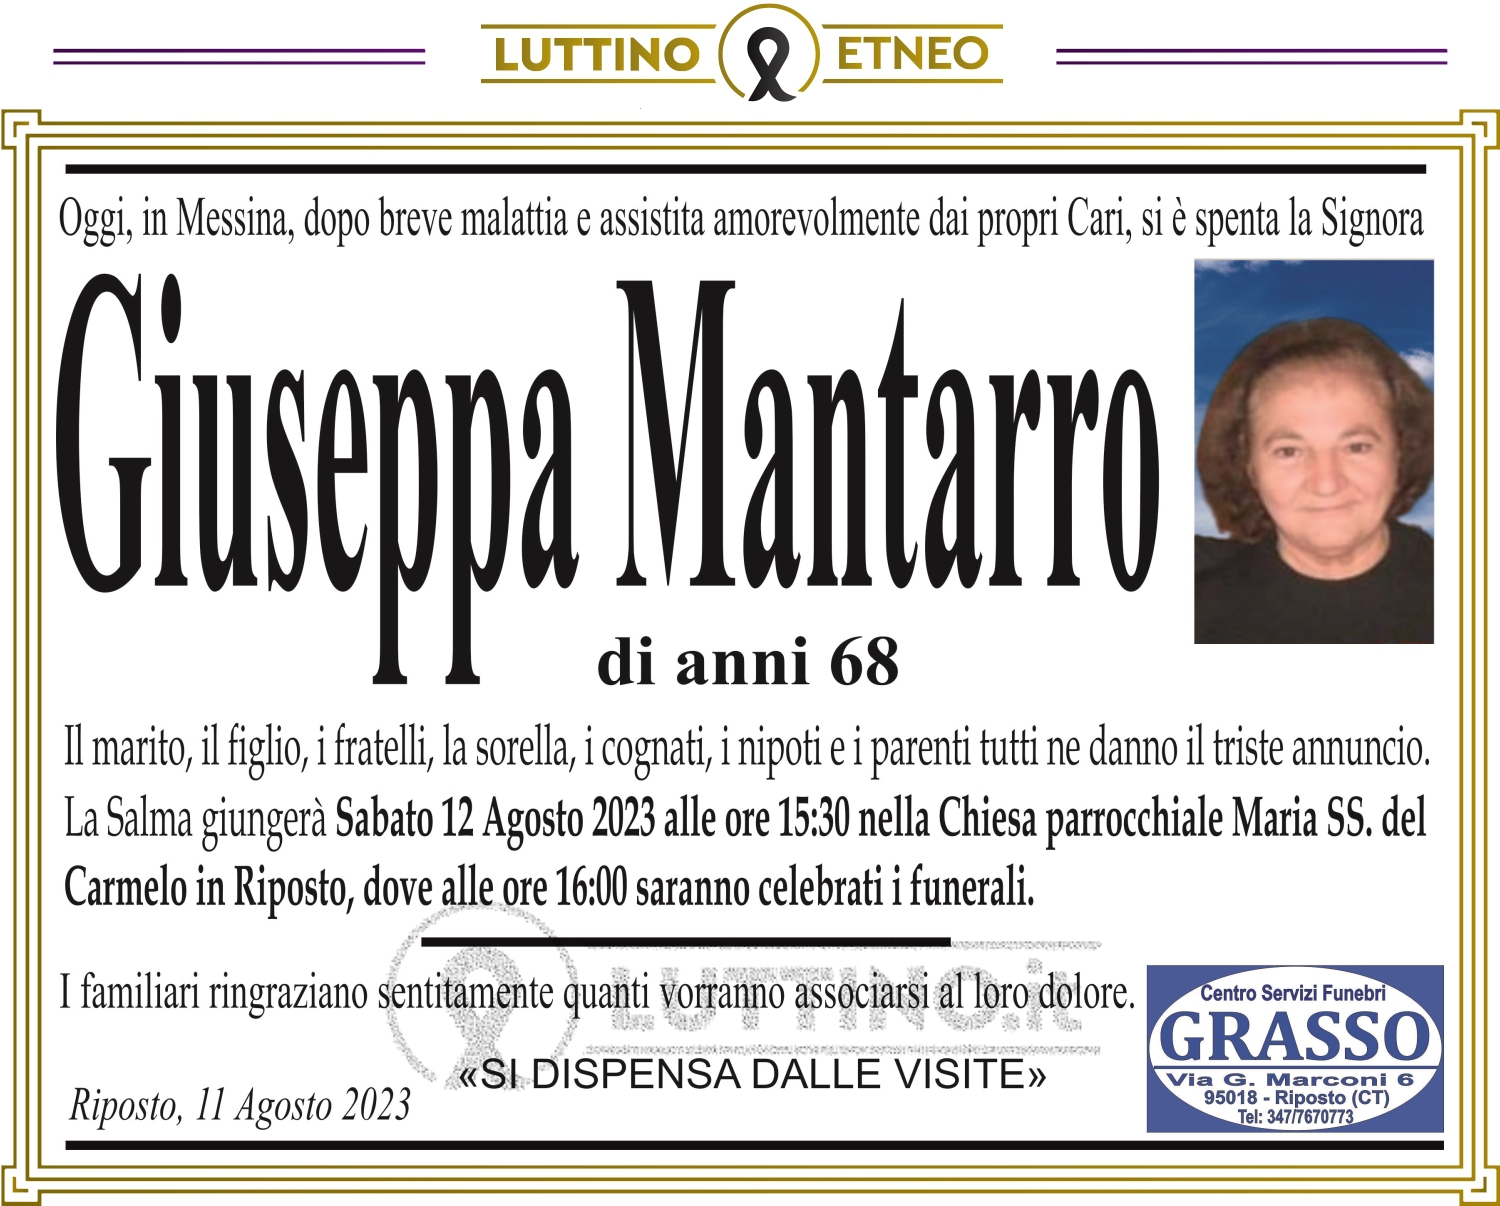 Giuseppa Mantarro